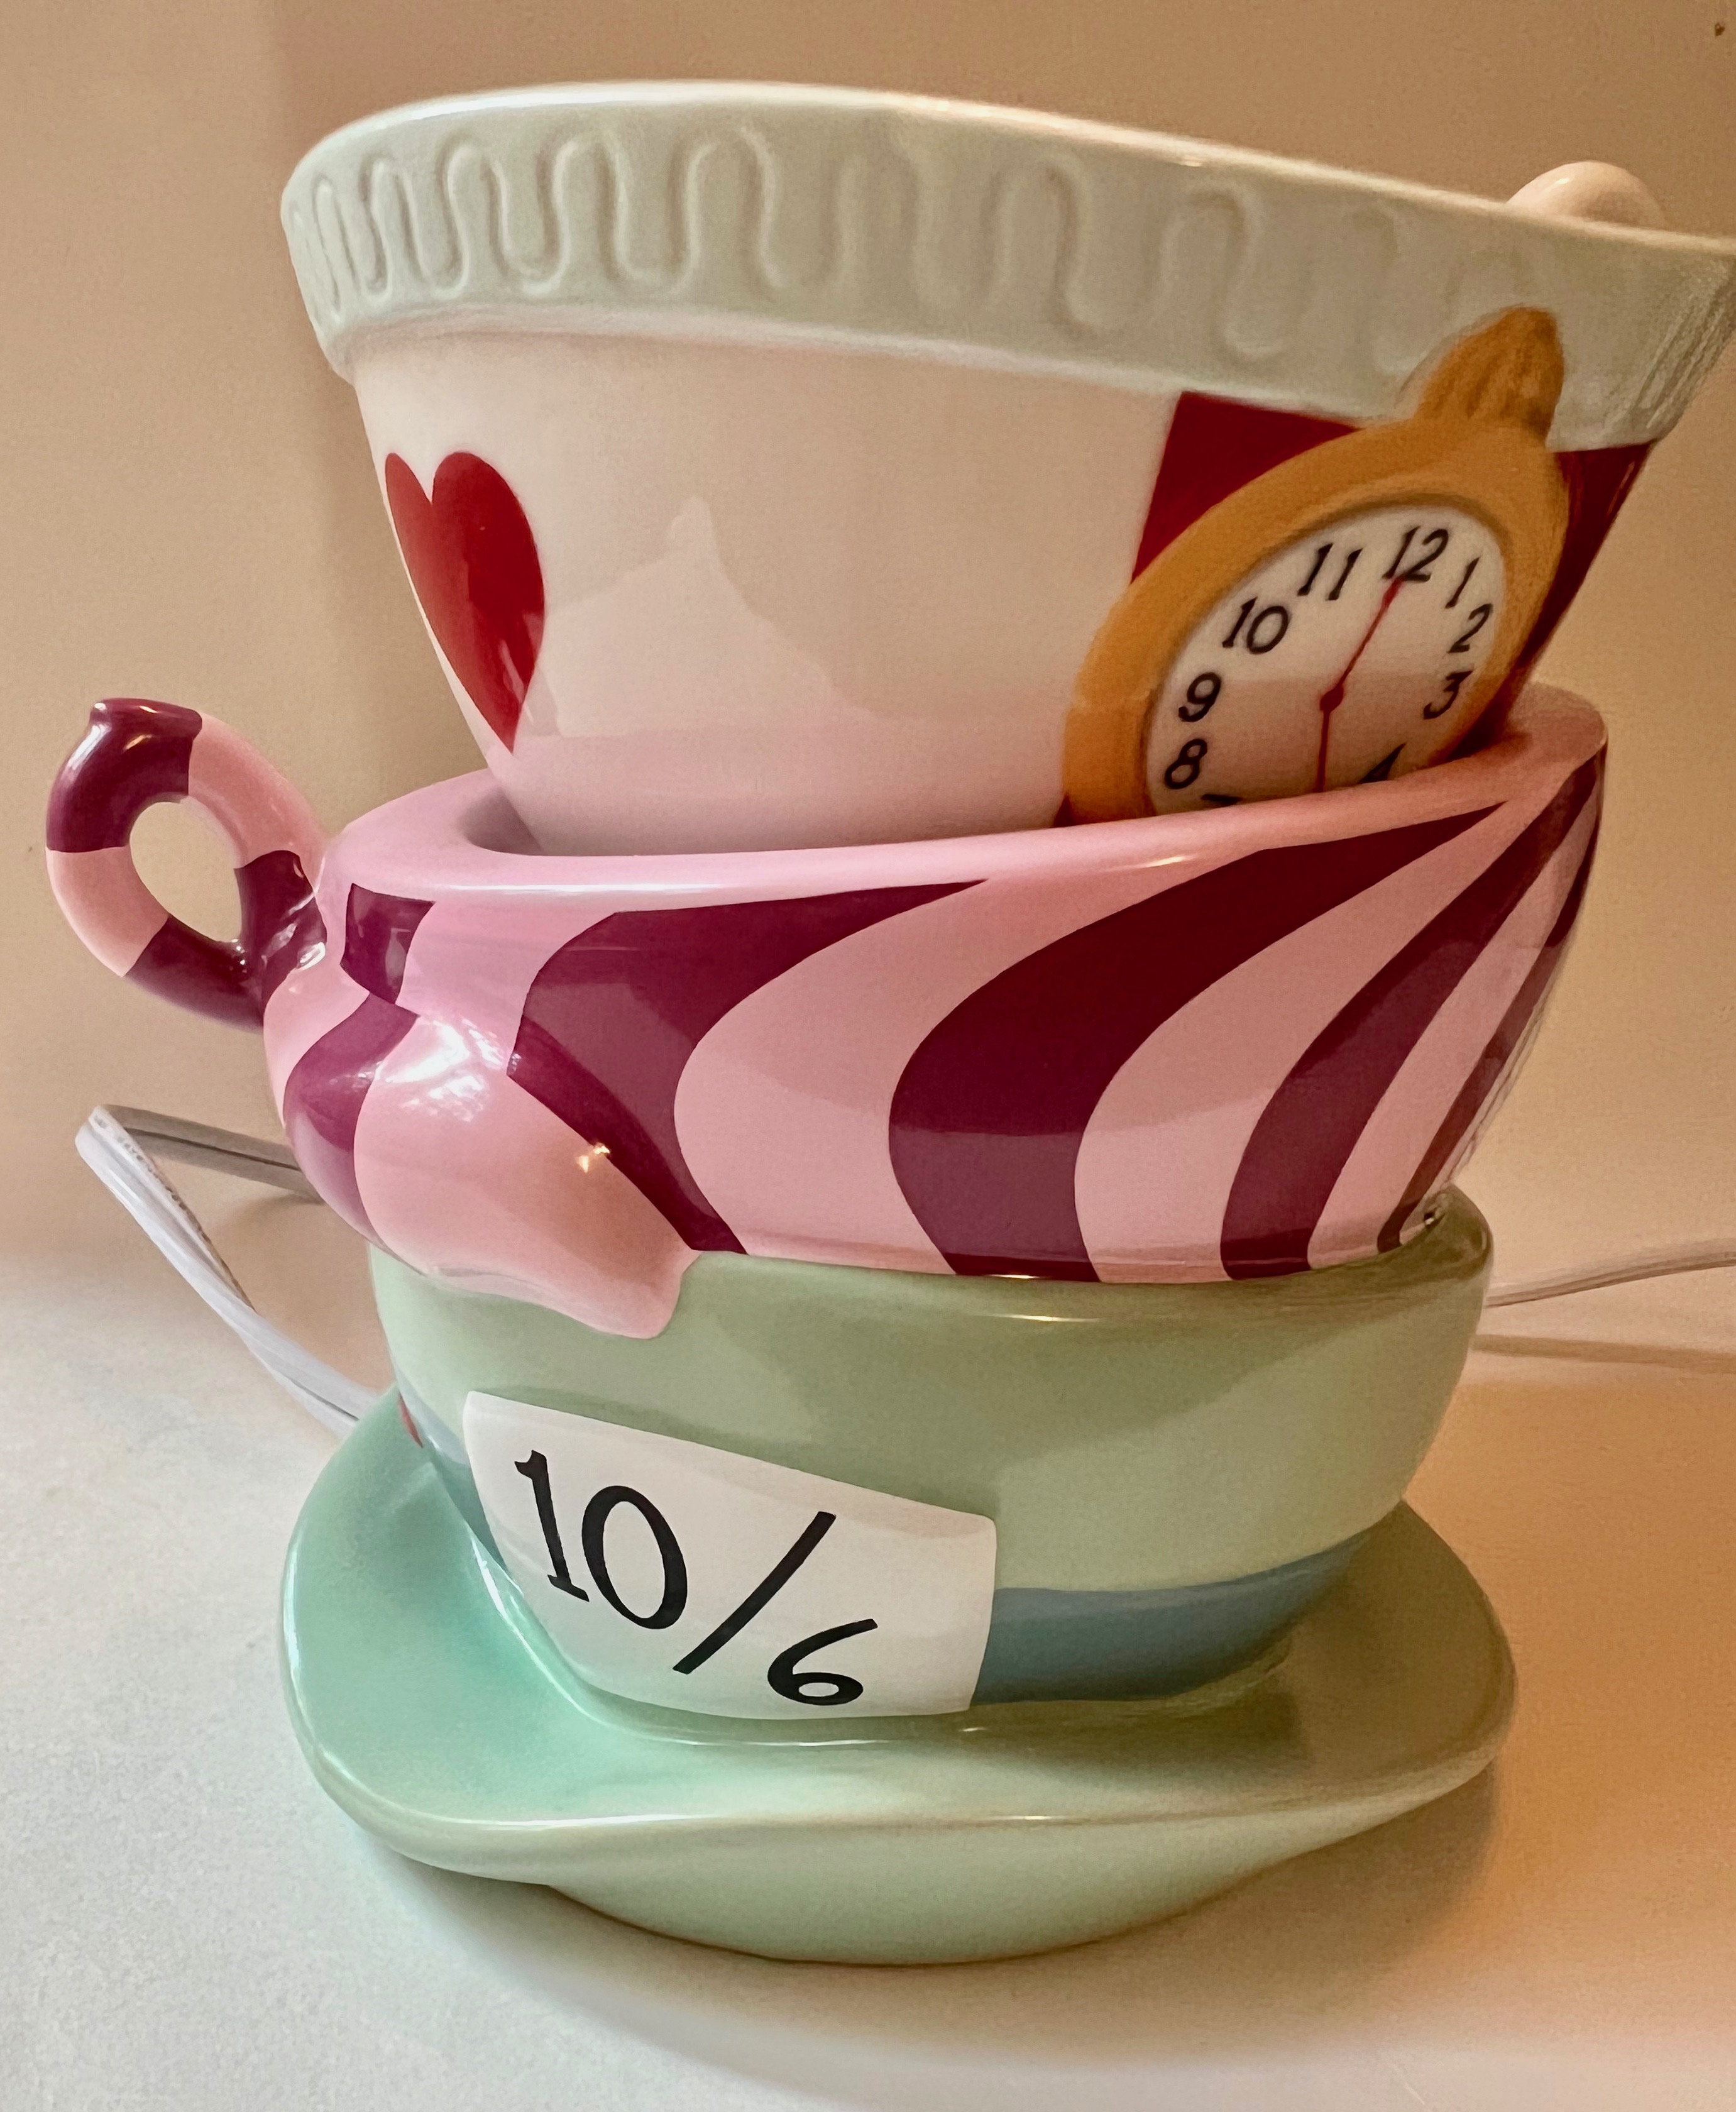 Alice In Wonderland Teacup Scentsy Warmer